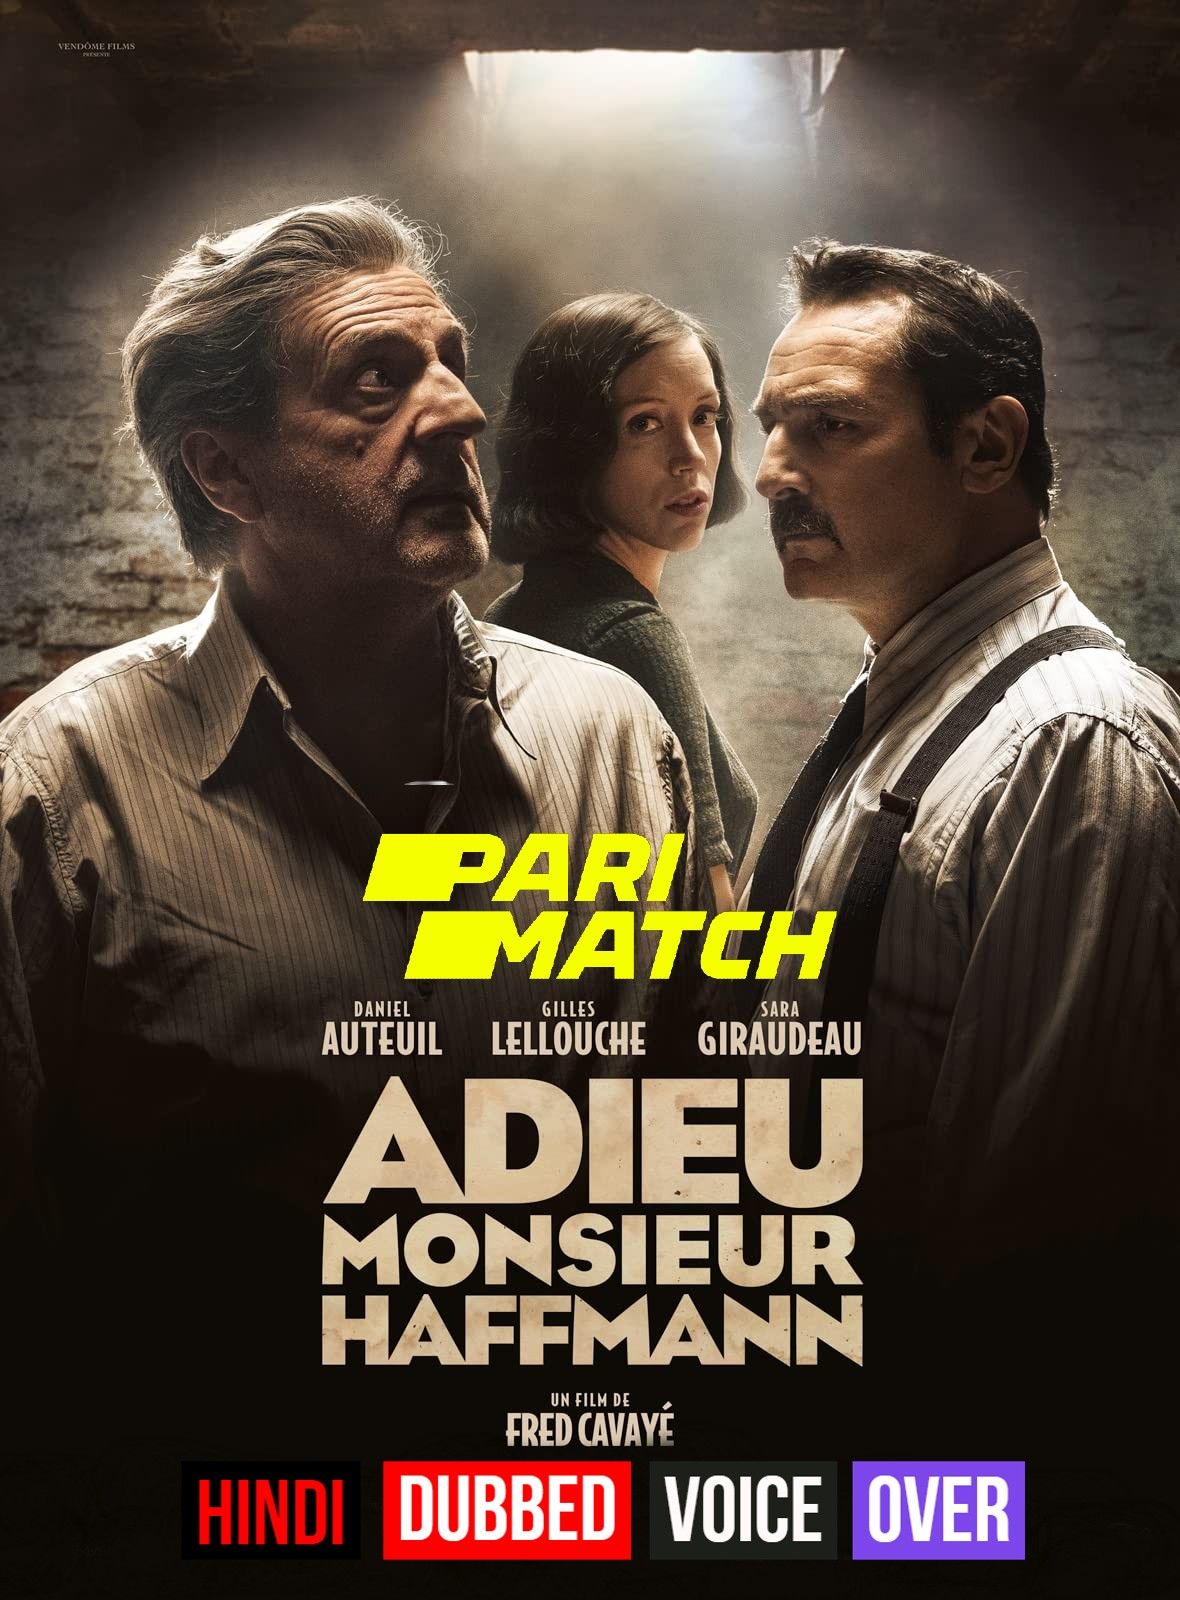 Adieu Monsieur Haffmann (2021) Hindi (Voice Over) Dubbed CAMRip download full movie